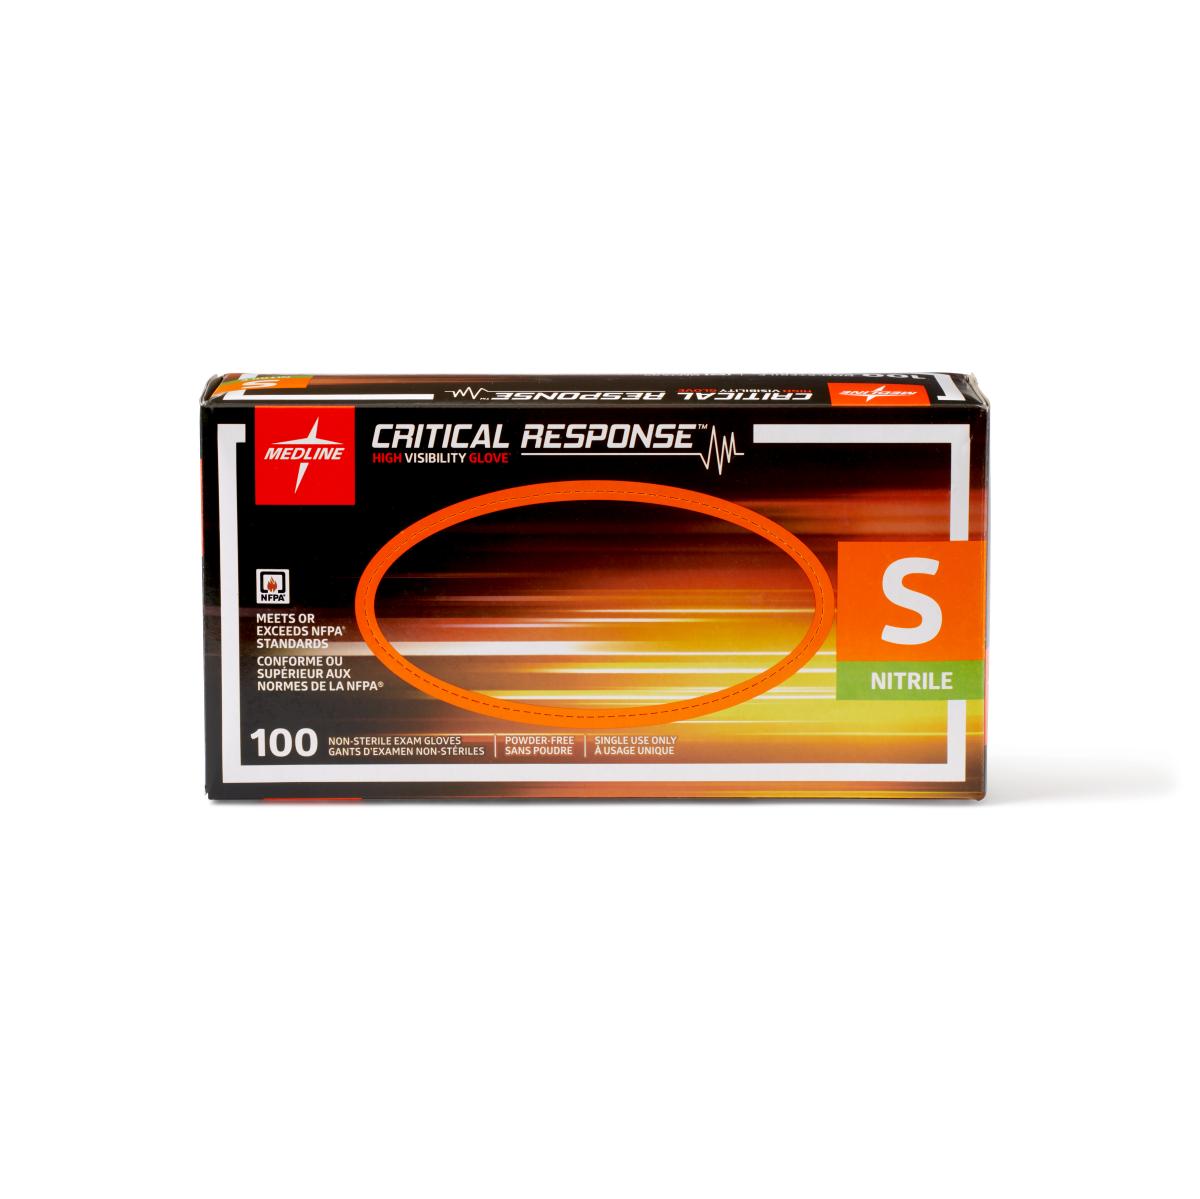 Critical Response brand nitrile gloves - small size box